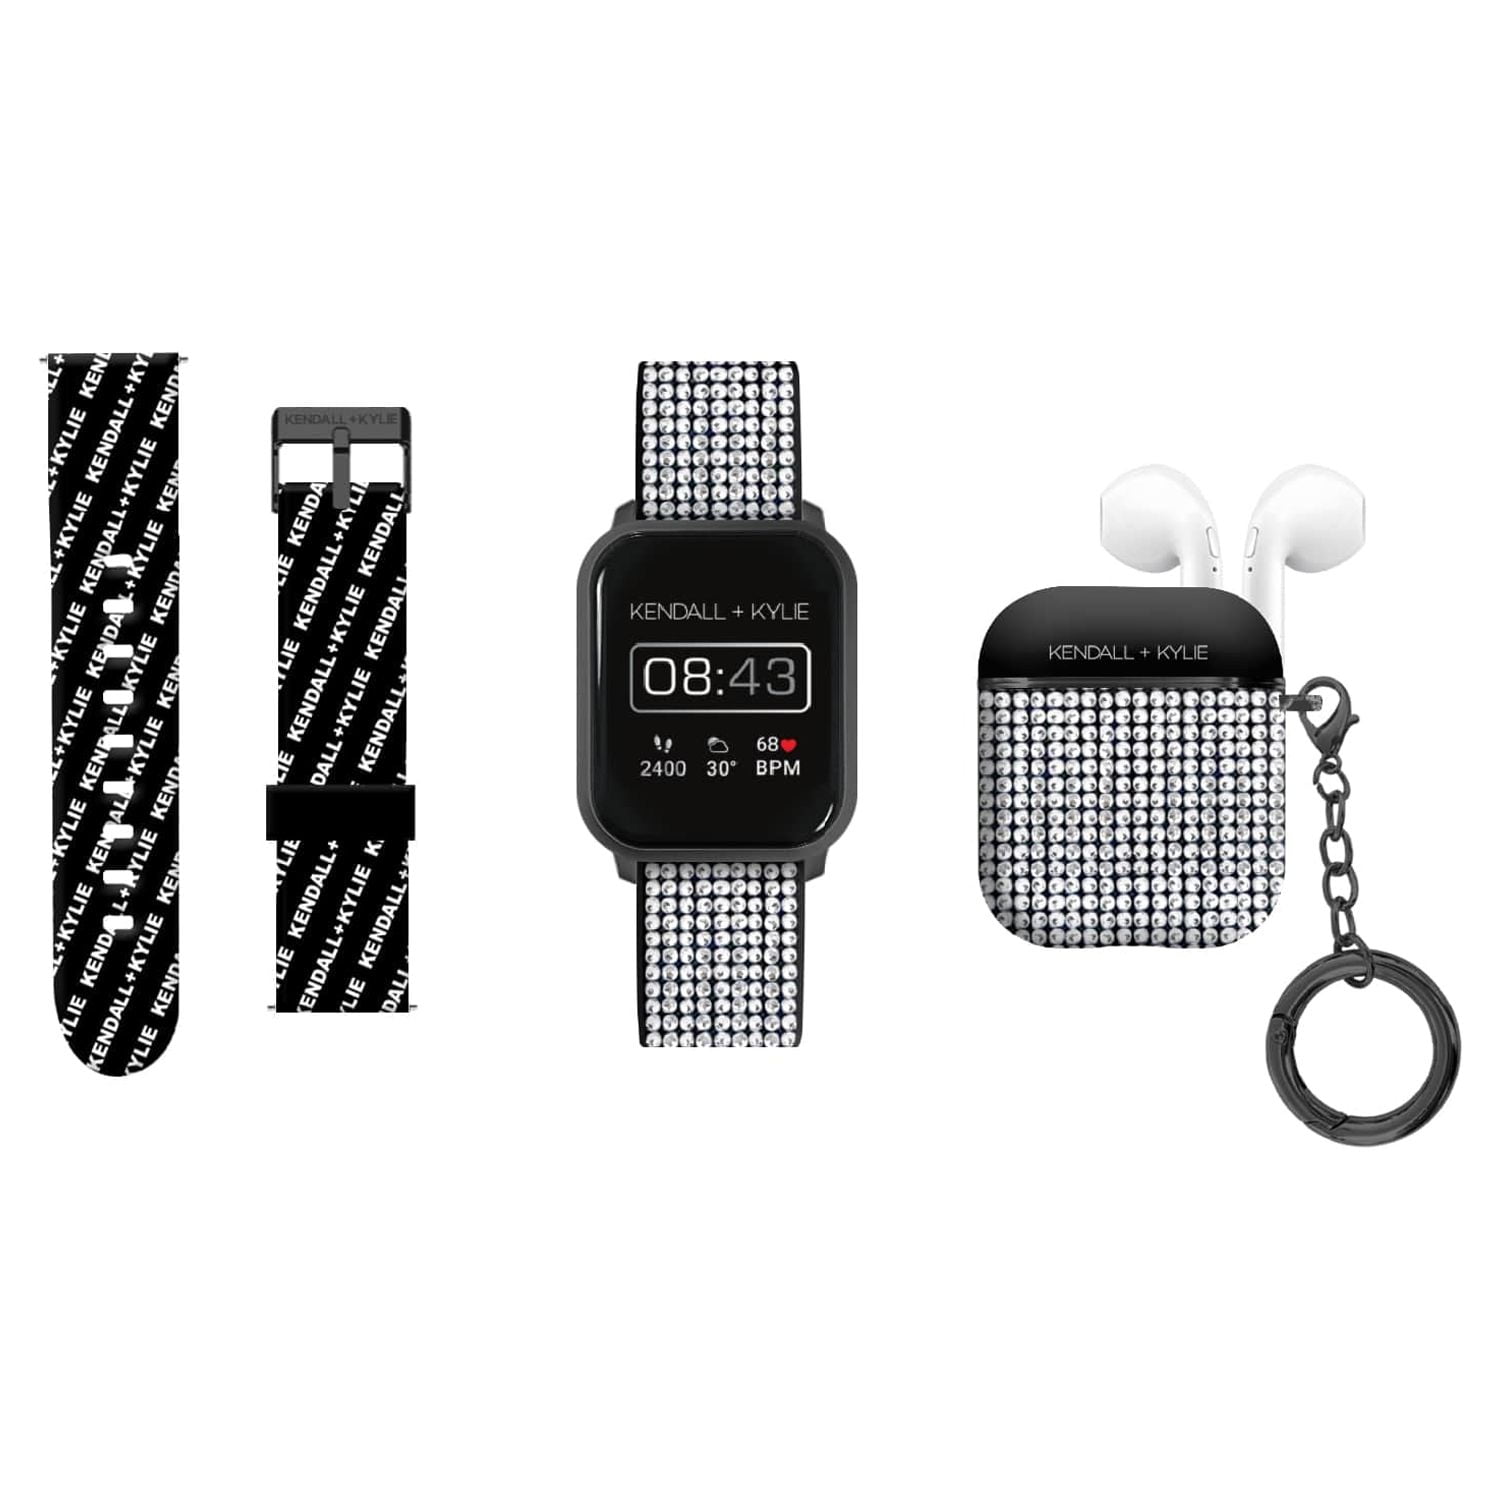 iTech Fusion 2 Unisex Black Smart Watch with Wireless Headphone  900348B-40-G02 